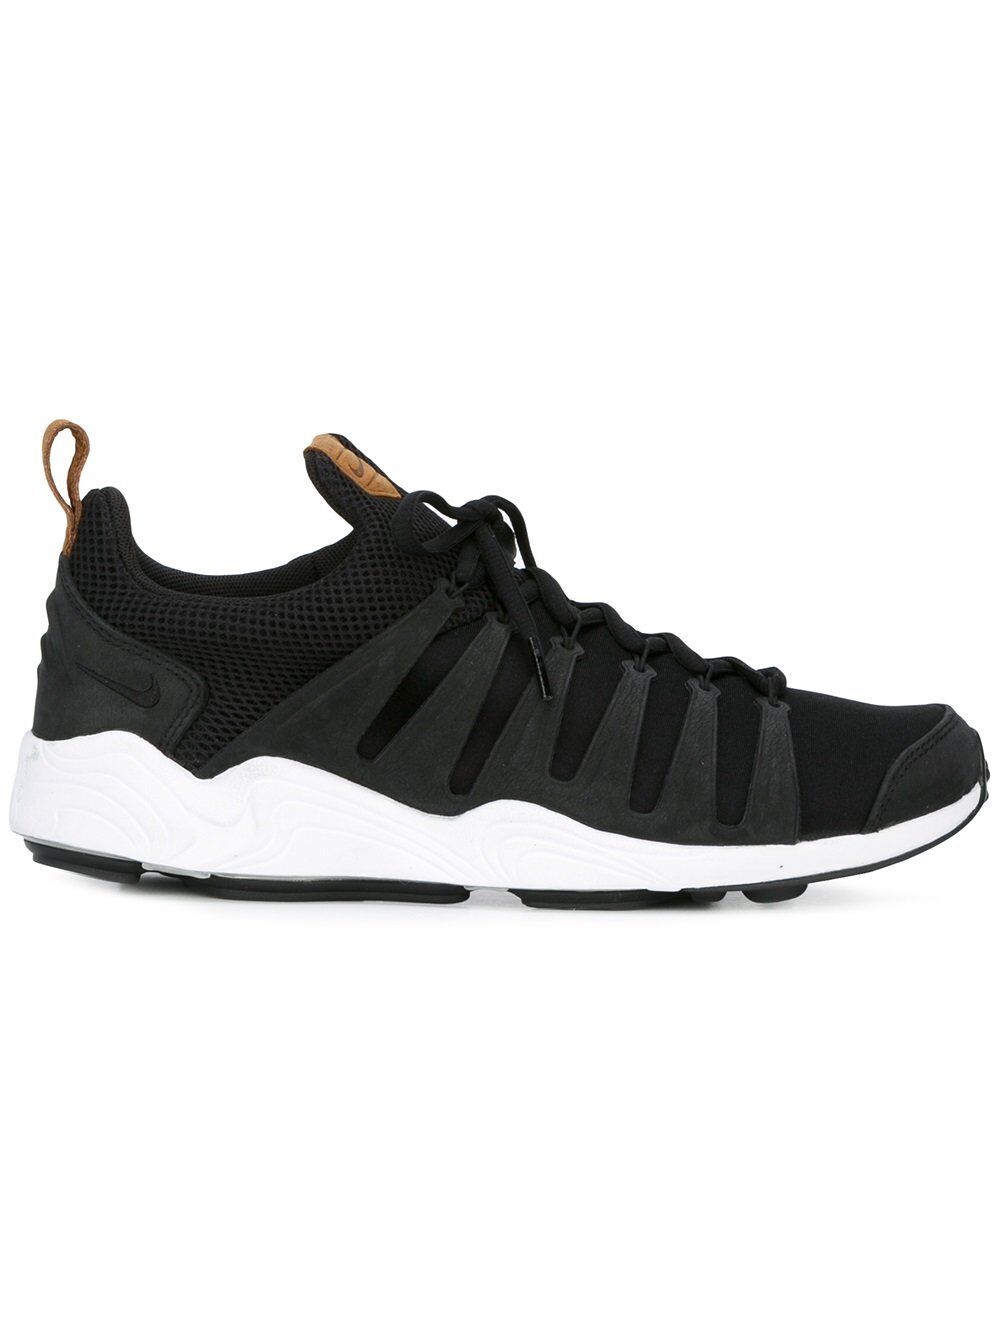 Men's Nike Air Zoom Spirimic Casual Shoes, 881983 003 Multi Sizes Black/Black/White/Hazelnut